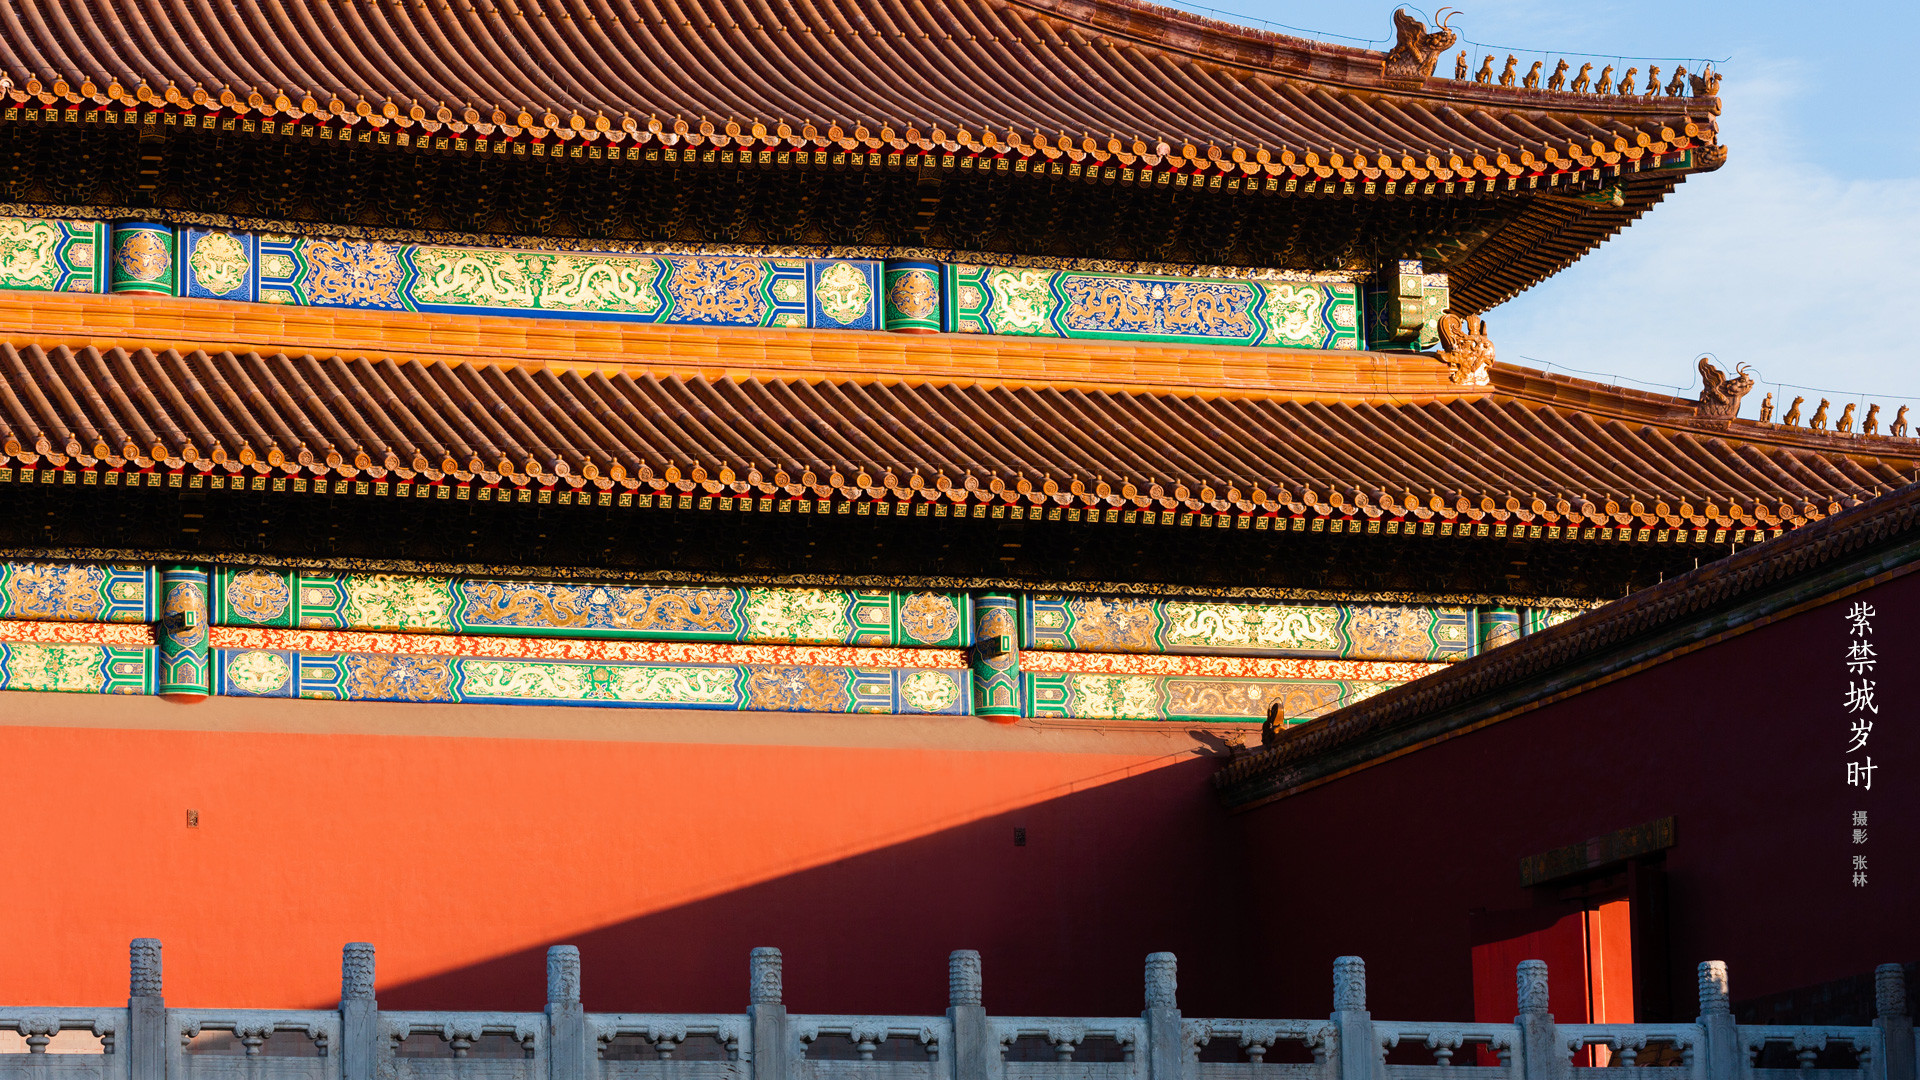 1920x1080 Seasonal Scenery of the Forbidden City: The Lantern Festival